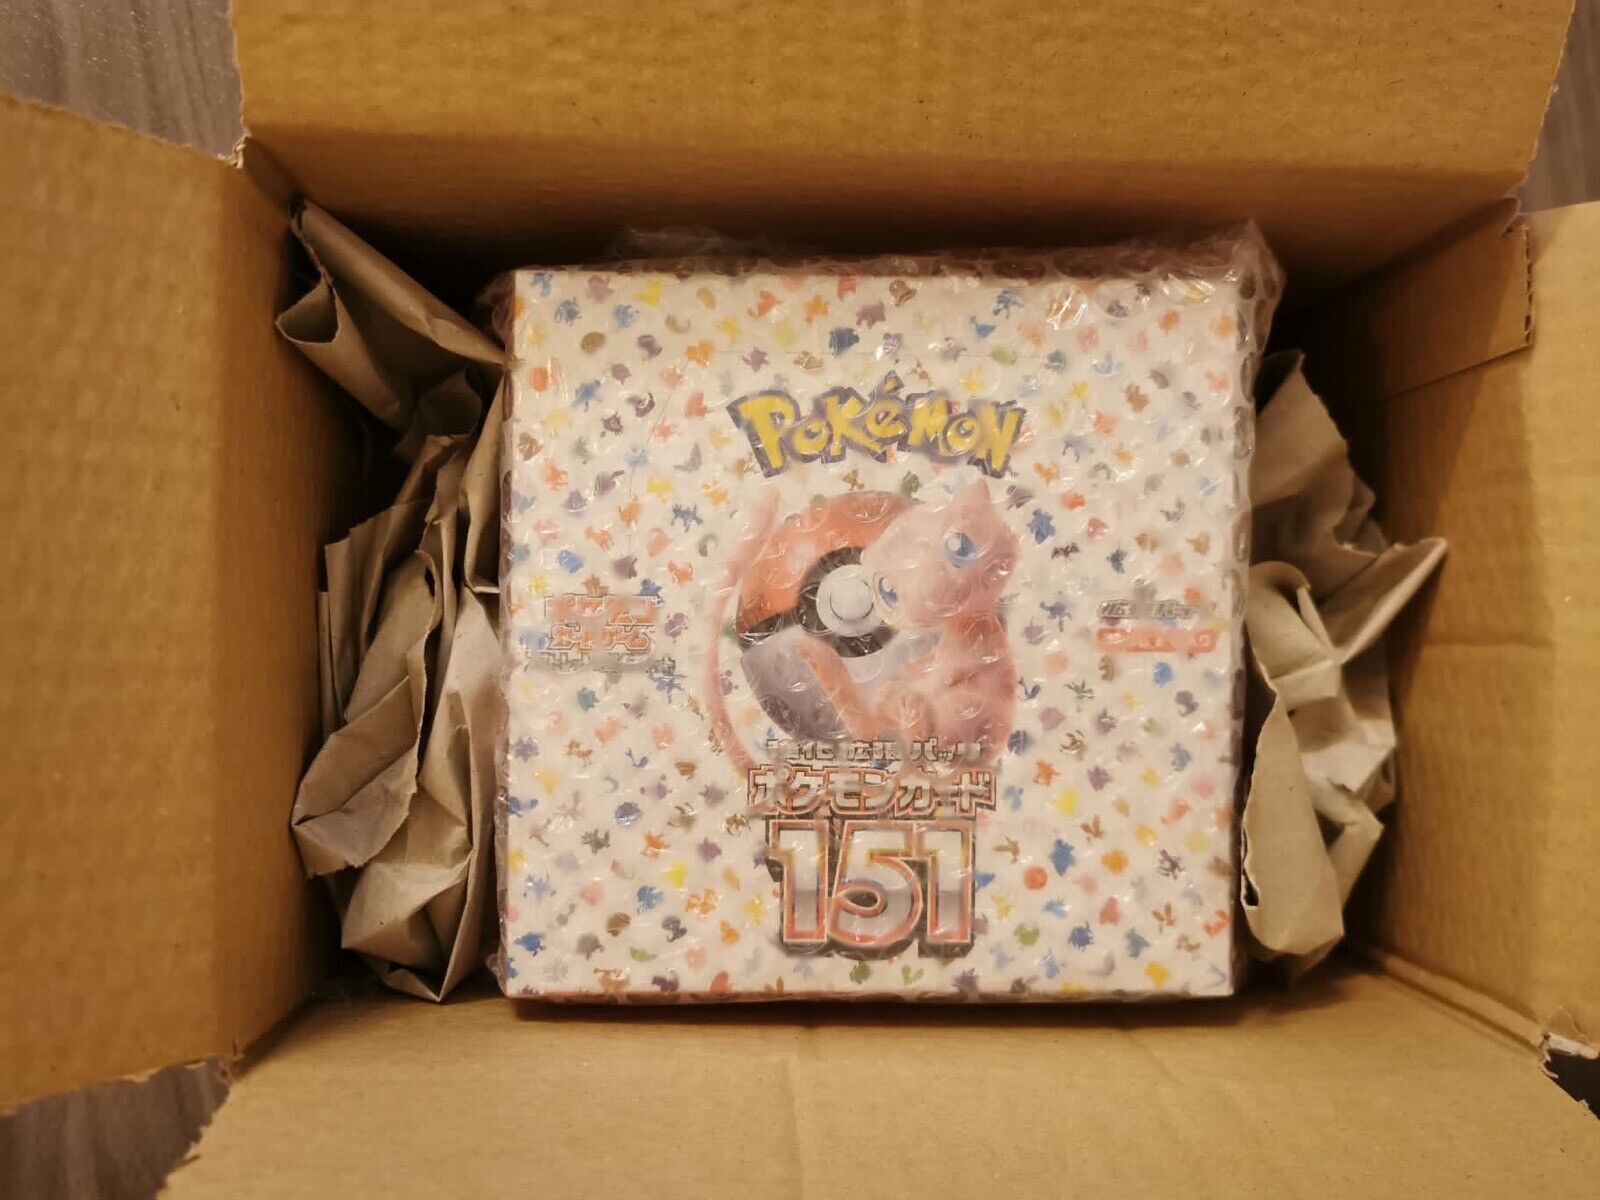 Pokémon TCG: 151 Japanese Pokemon Booster Box x1 - Ready To Ship Now Lot#3